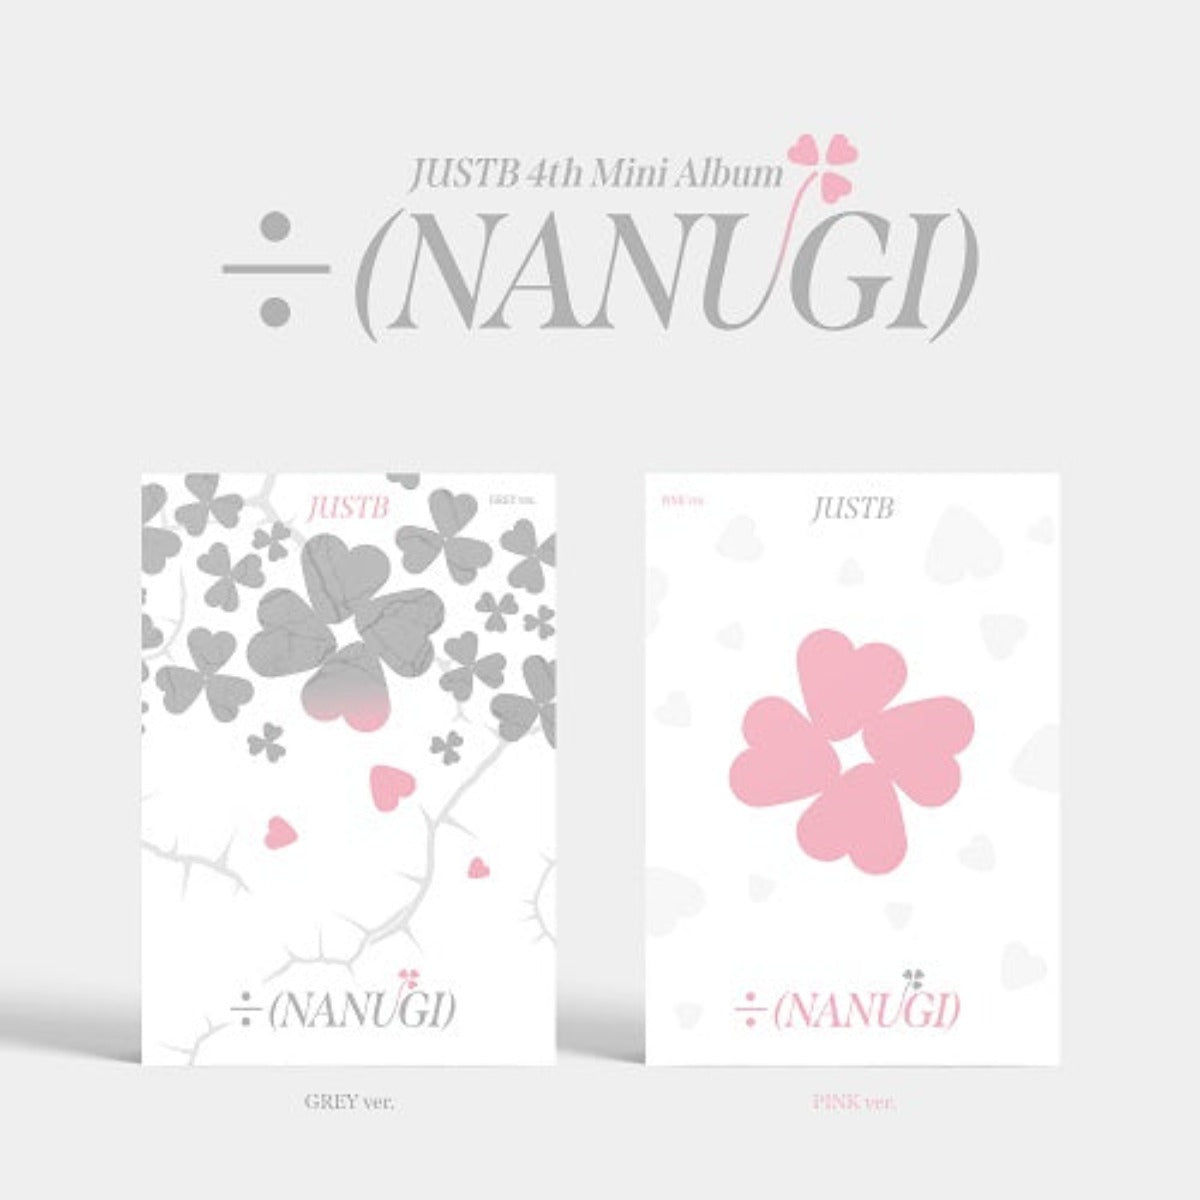 JUST B Mini Album Vol. 4 - ÷ (NANUGI) (Random Version)